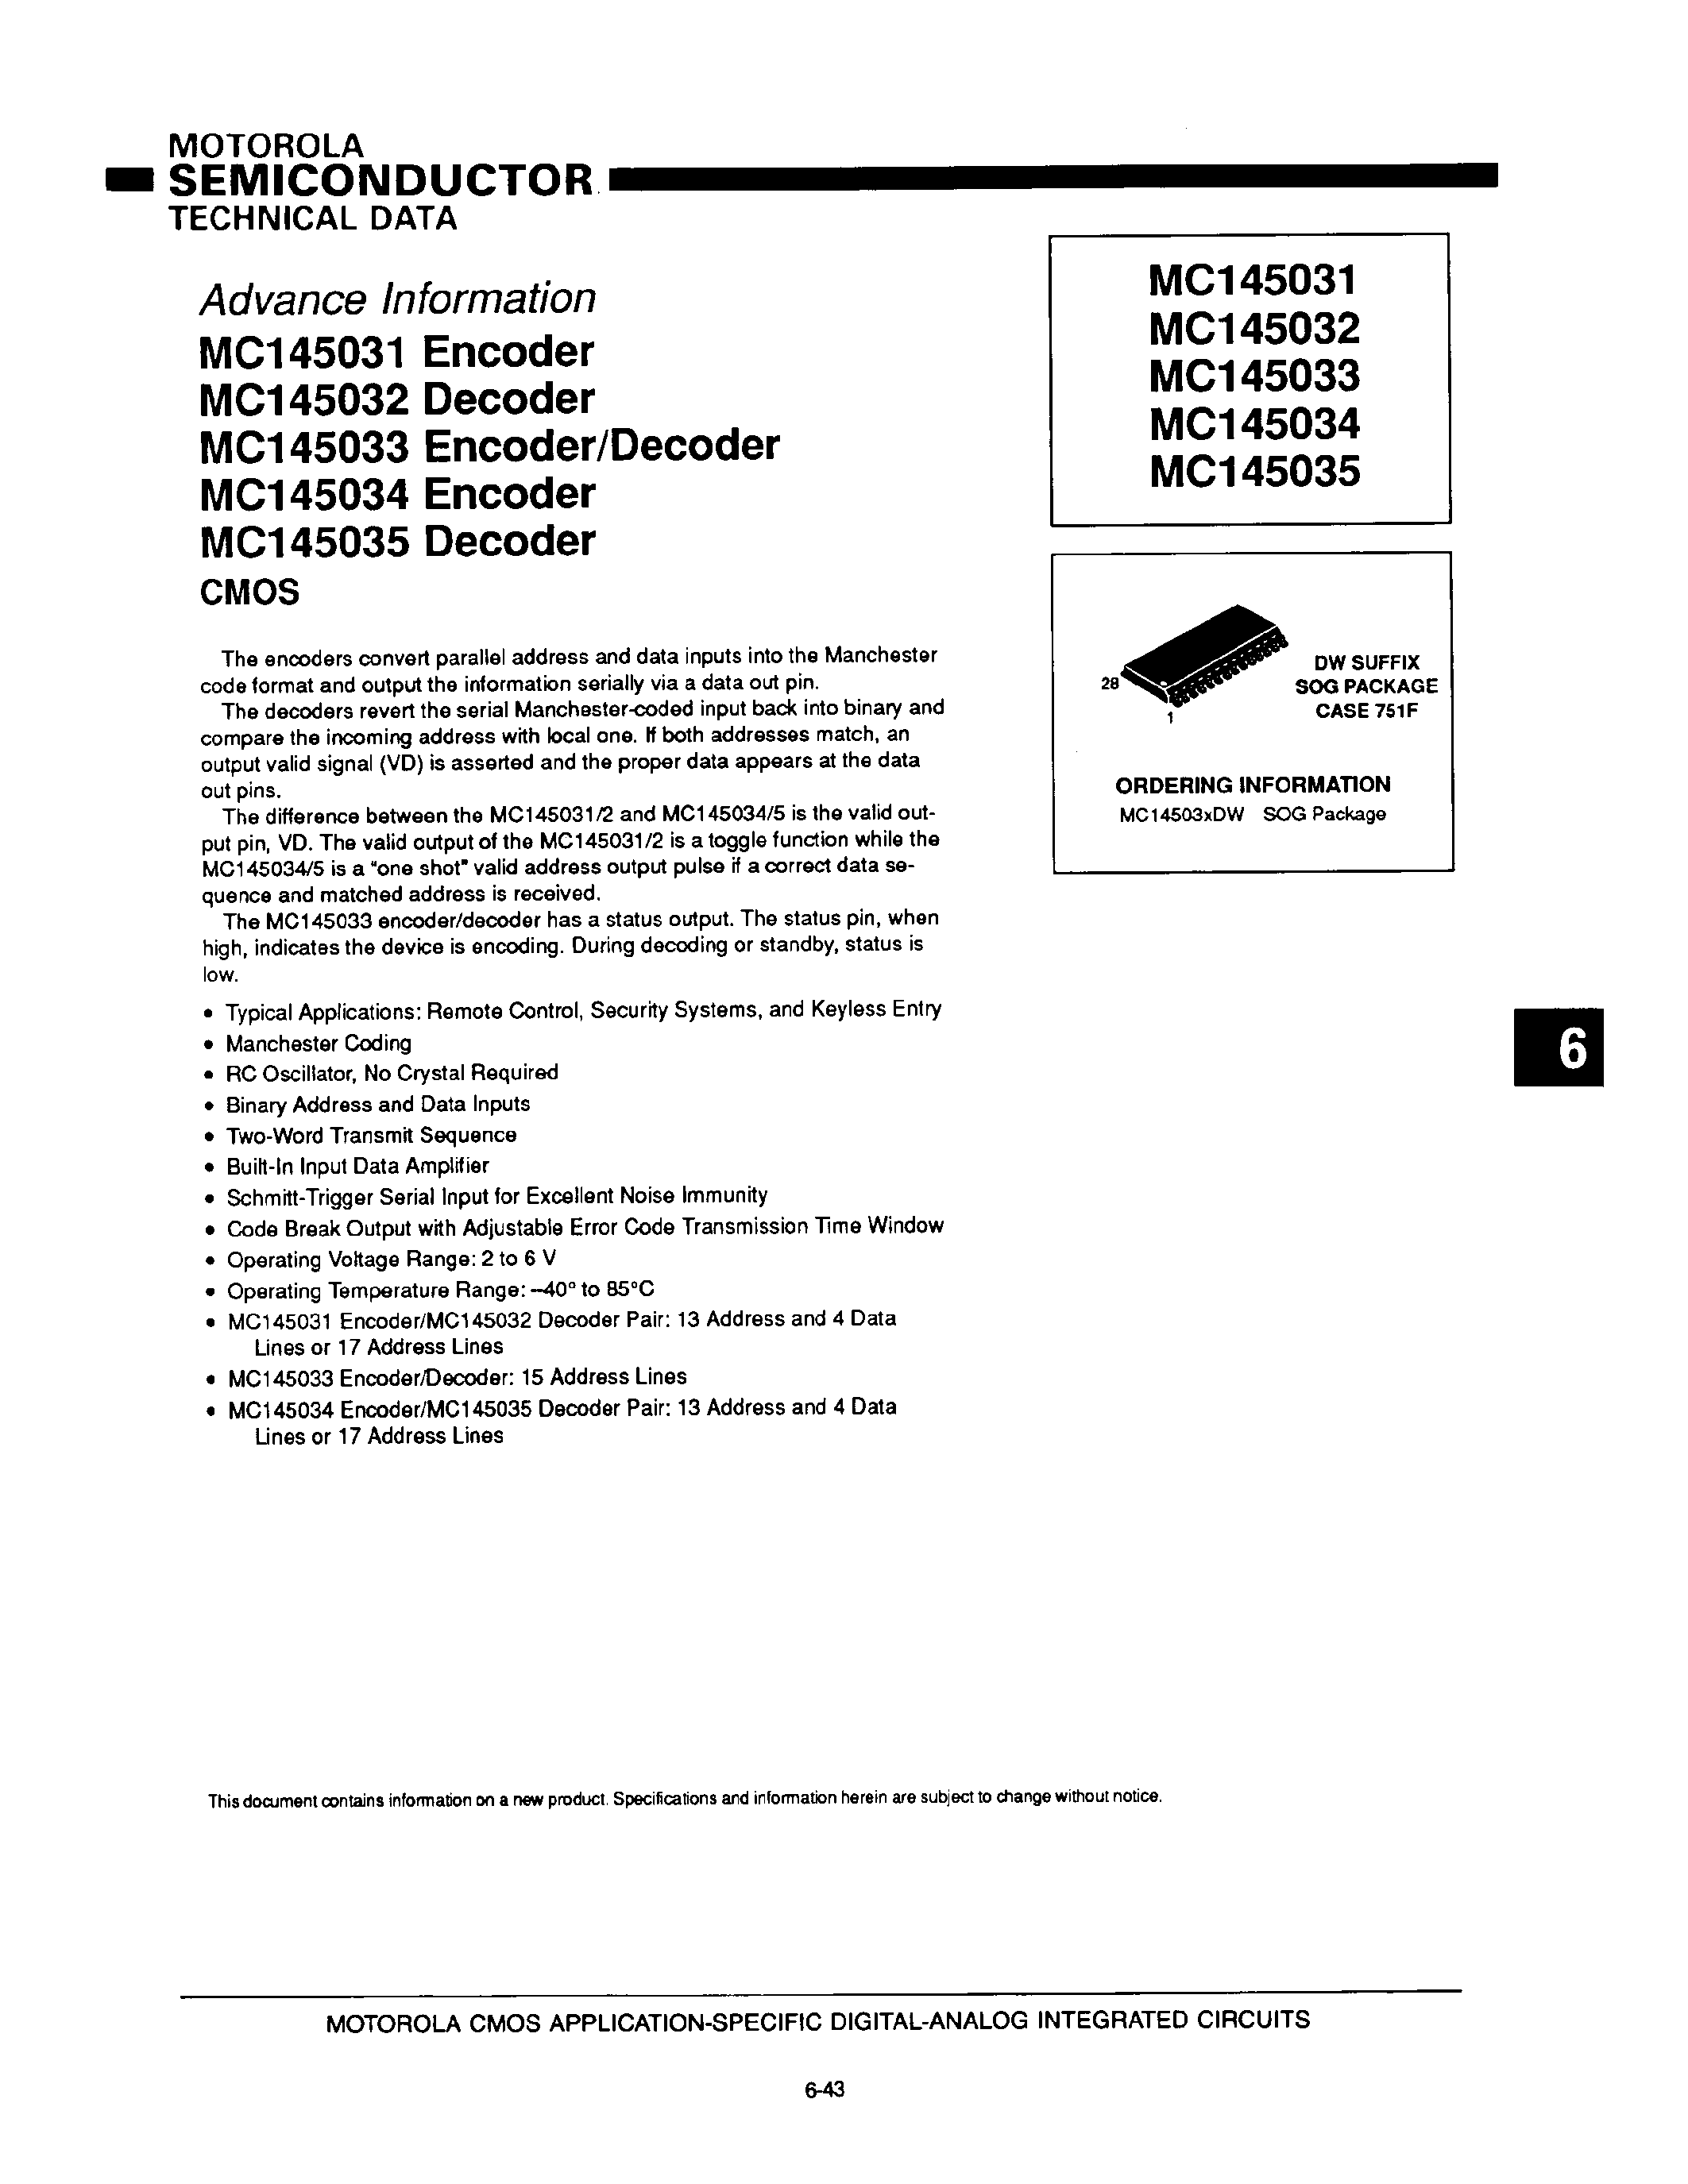 Даташит MC145031 - (MC145031 - MC145035) DW SUFFIX SOG PACKAGE CASE 751F страница 1